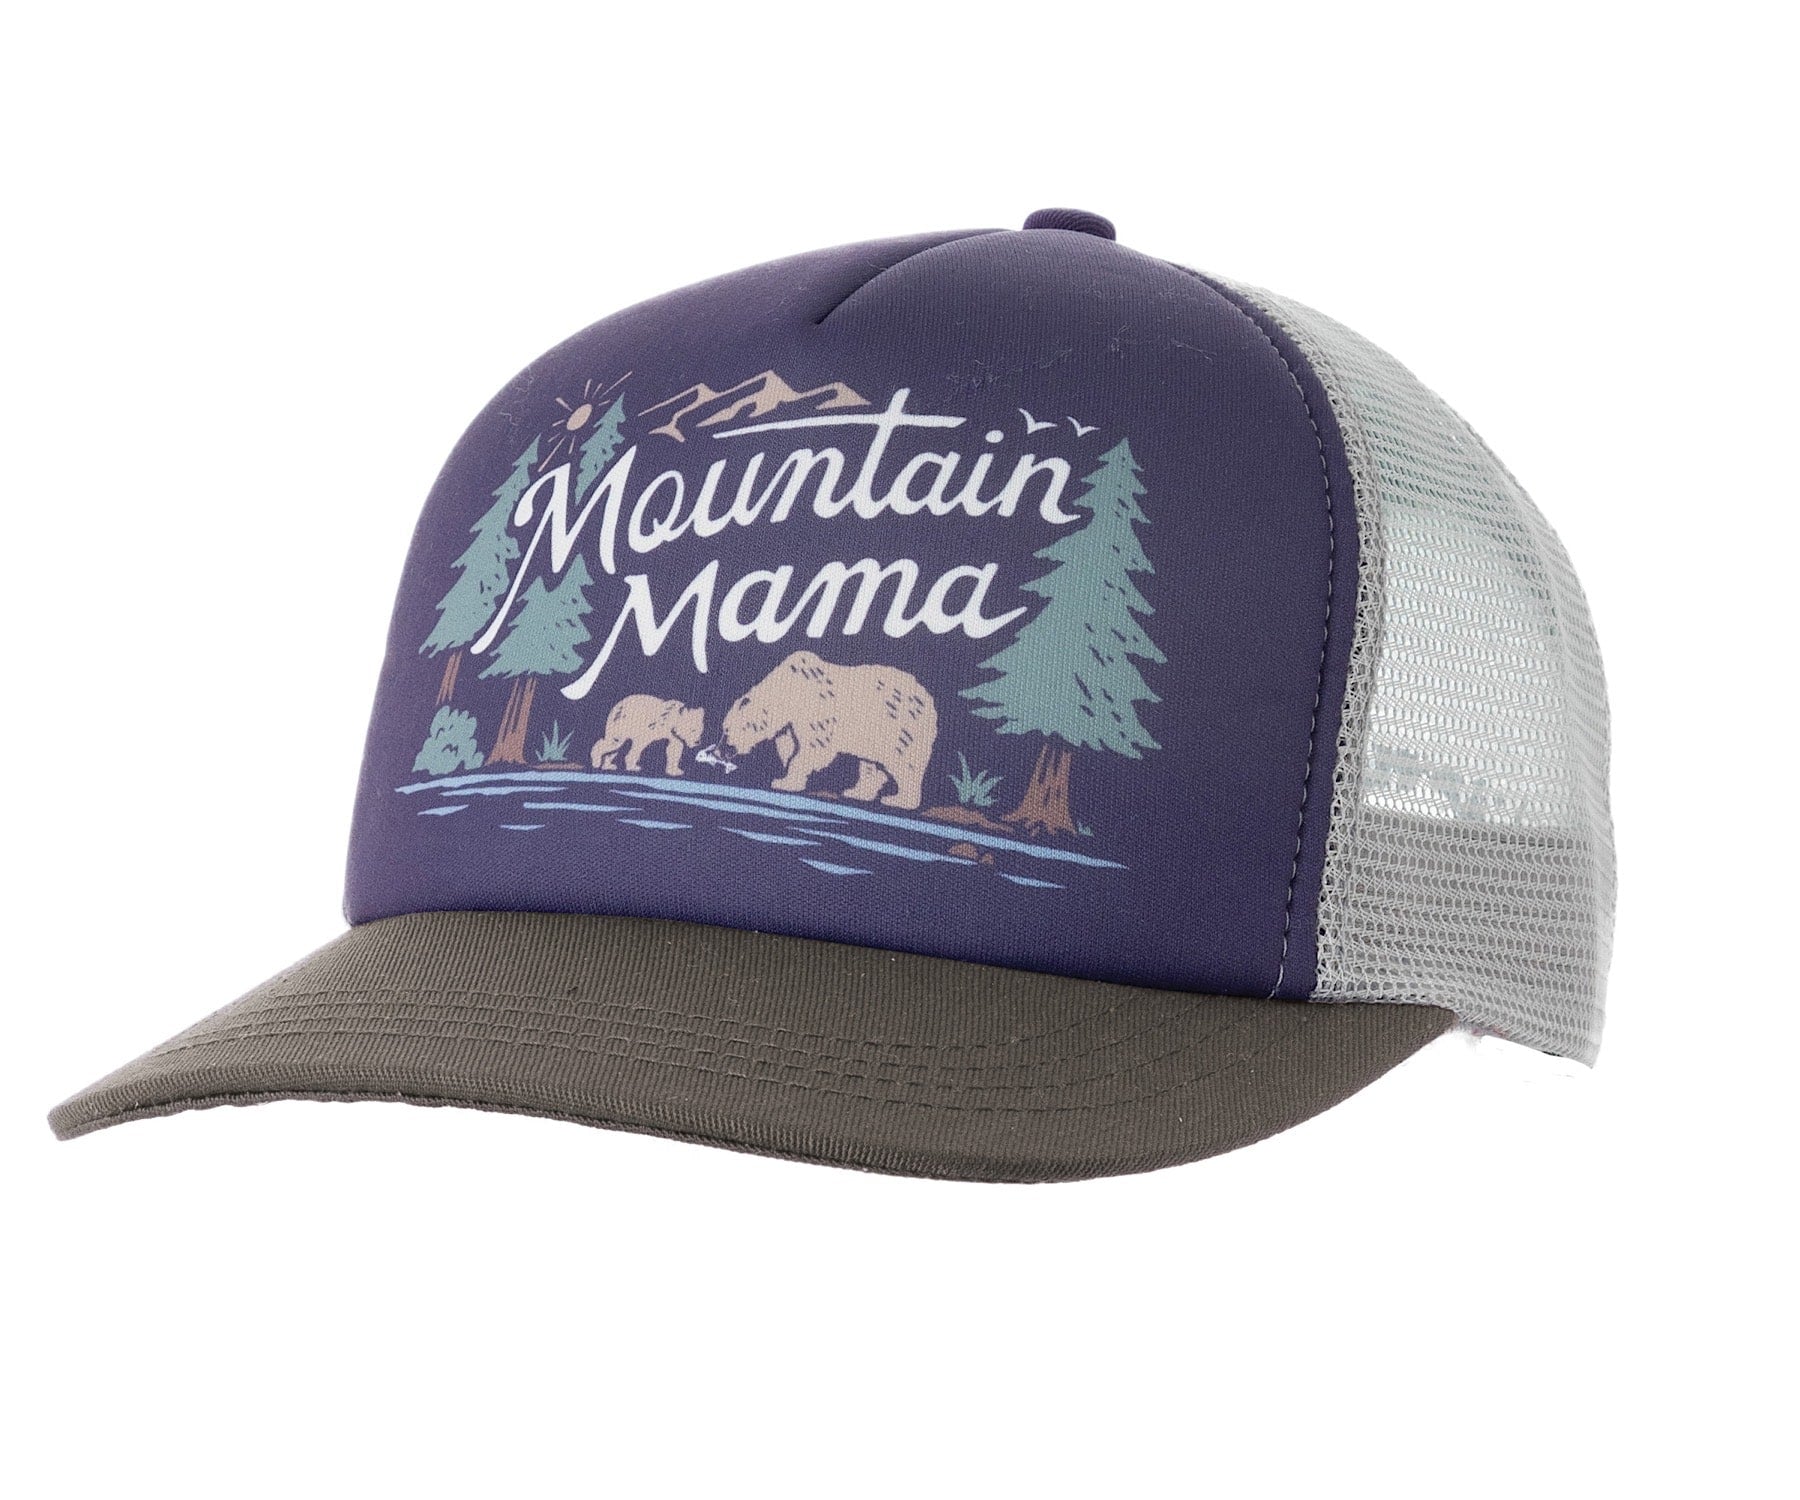 Ambler Mountain Mama Women's Trucker Hat - Tan